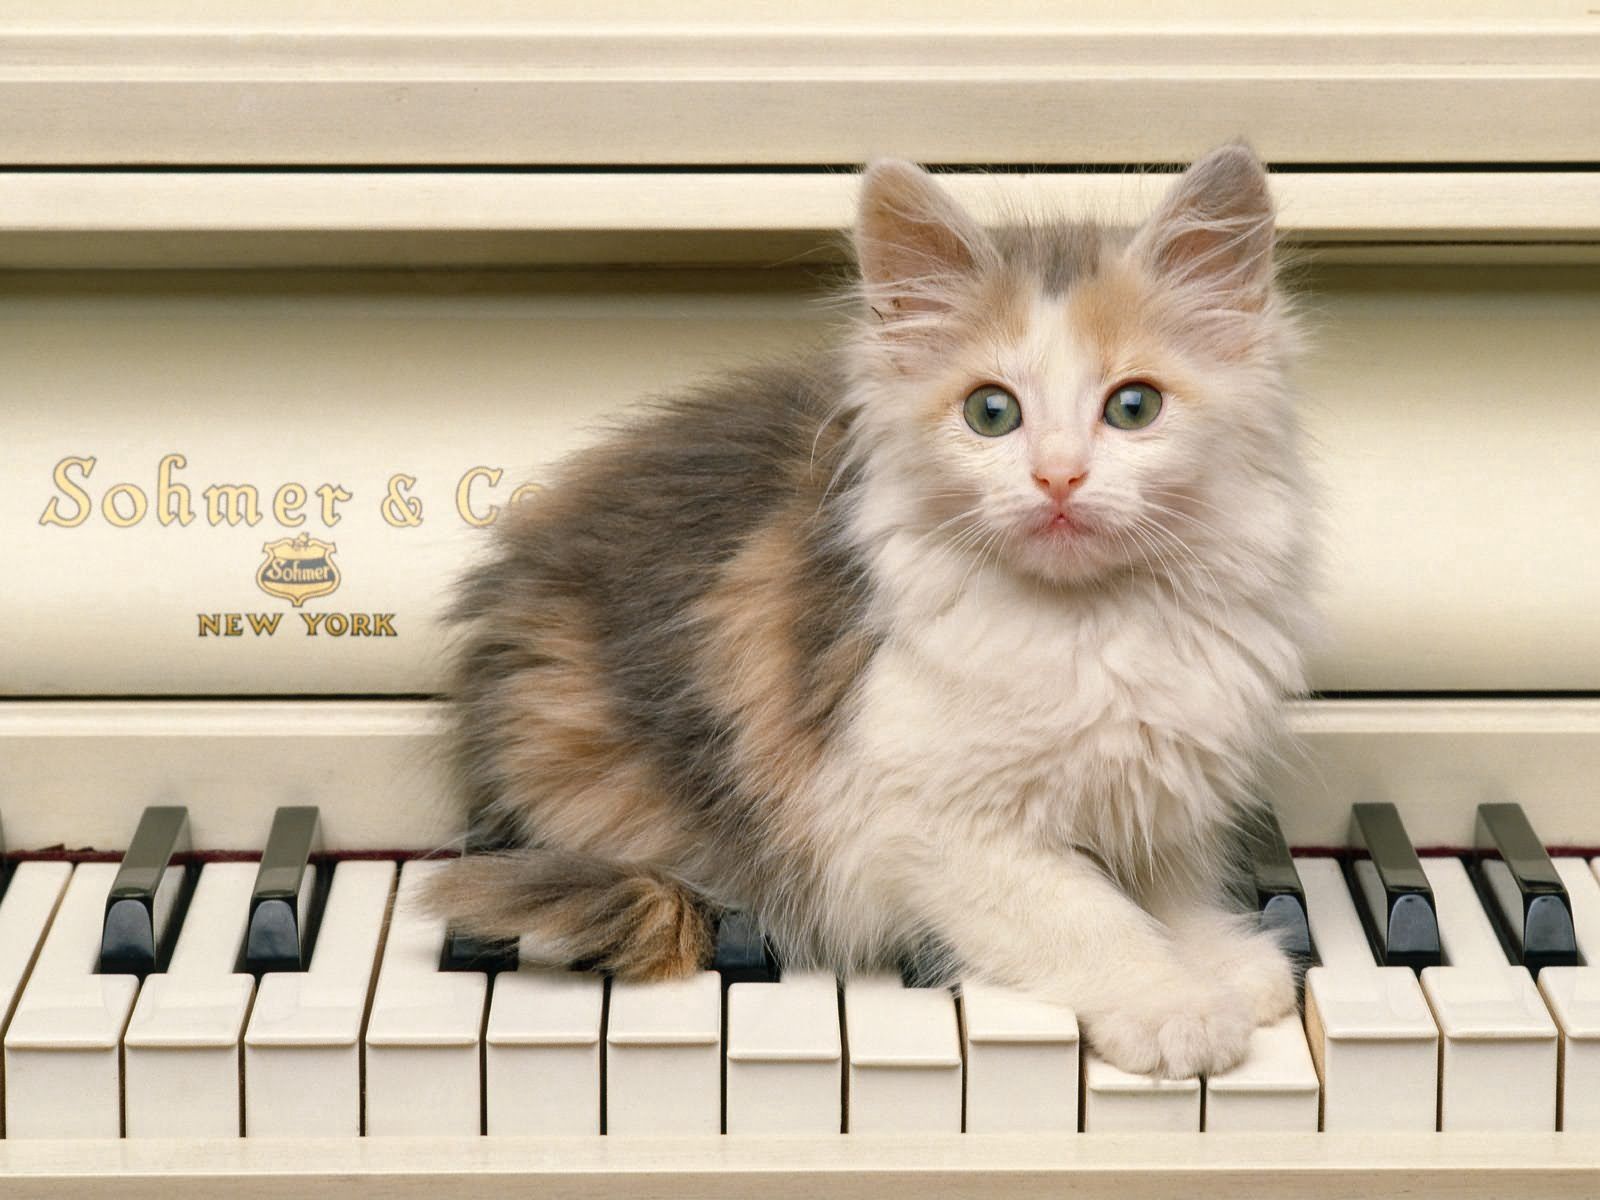 kitty, kitten, animals, piano, fluffy, sight, opinion, grand piano